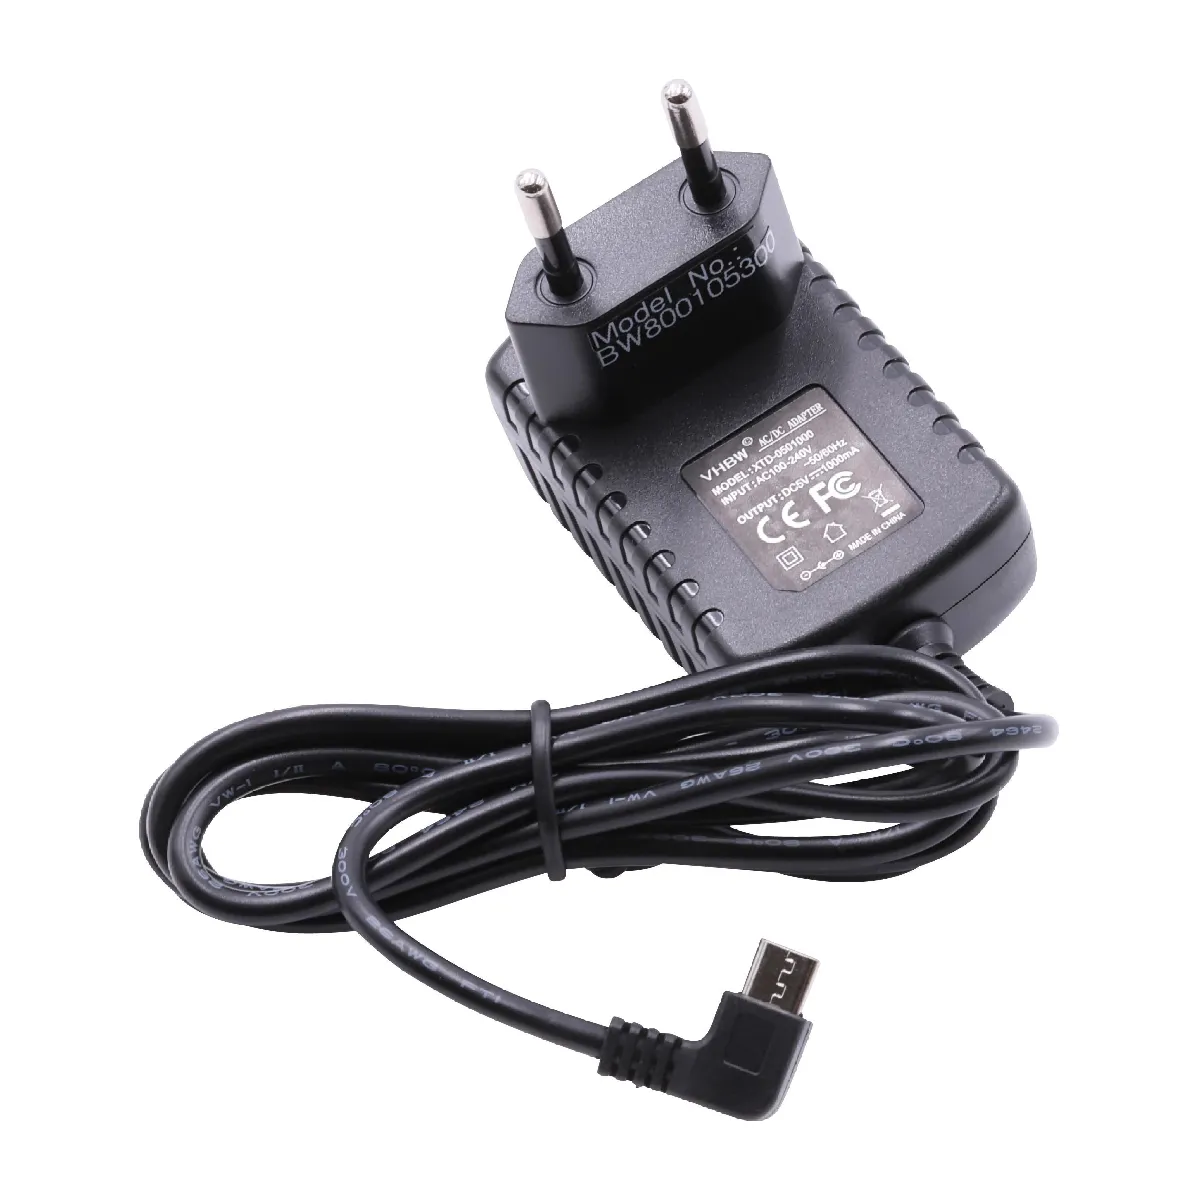 220V Bloc d'alimentation chargeur (1A) avec Micro-USB pour Acer beTouch E110 E120 E130 E310 E320 E400 Liquid Metal Stream NeoTouch P300, P400